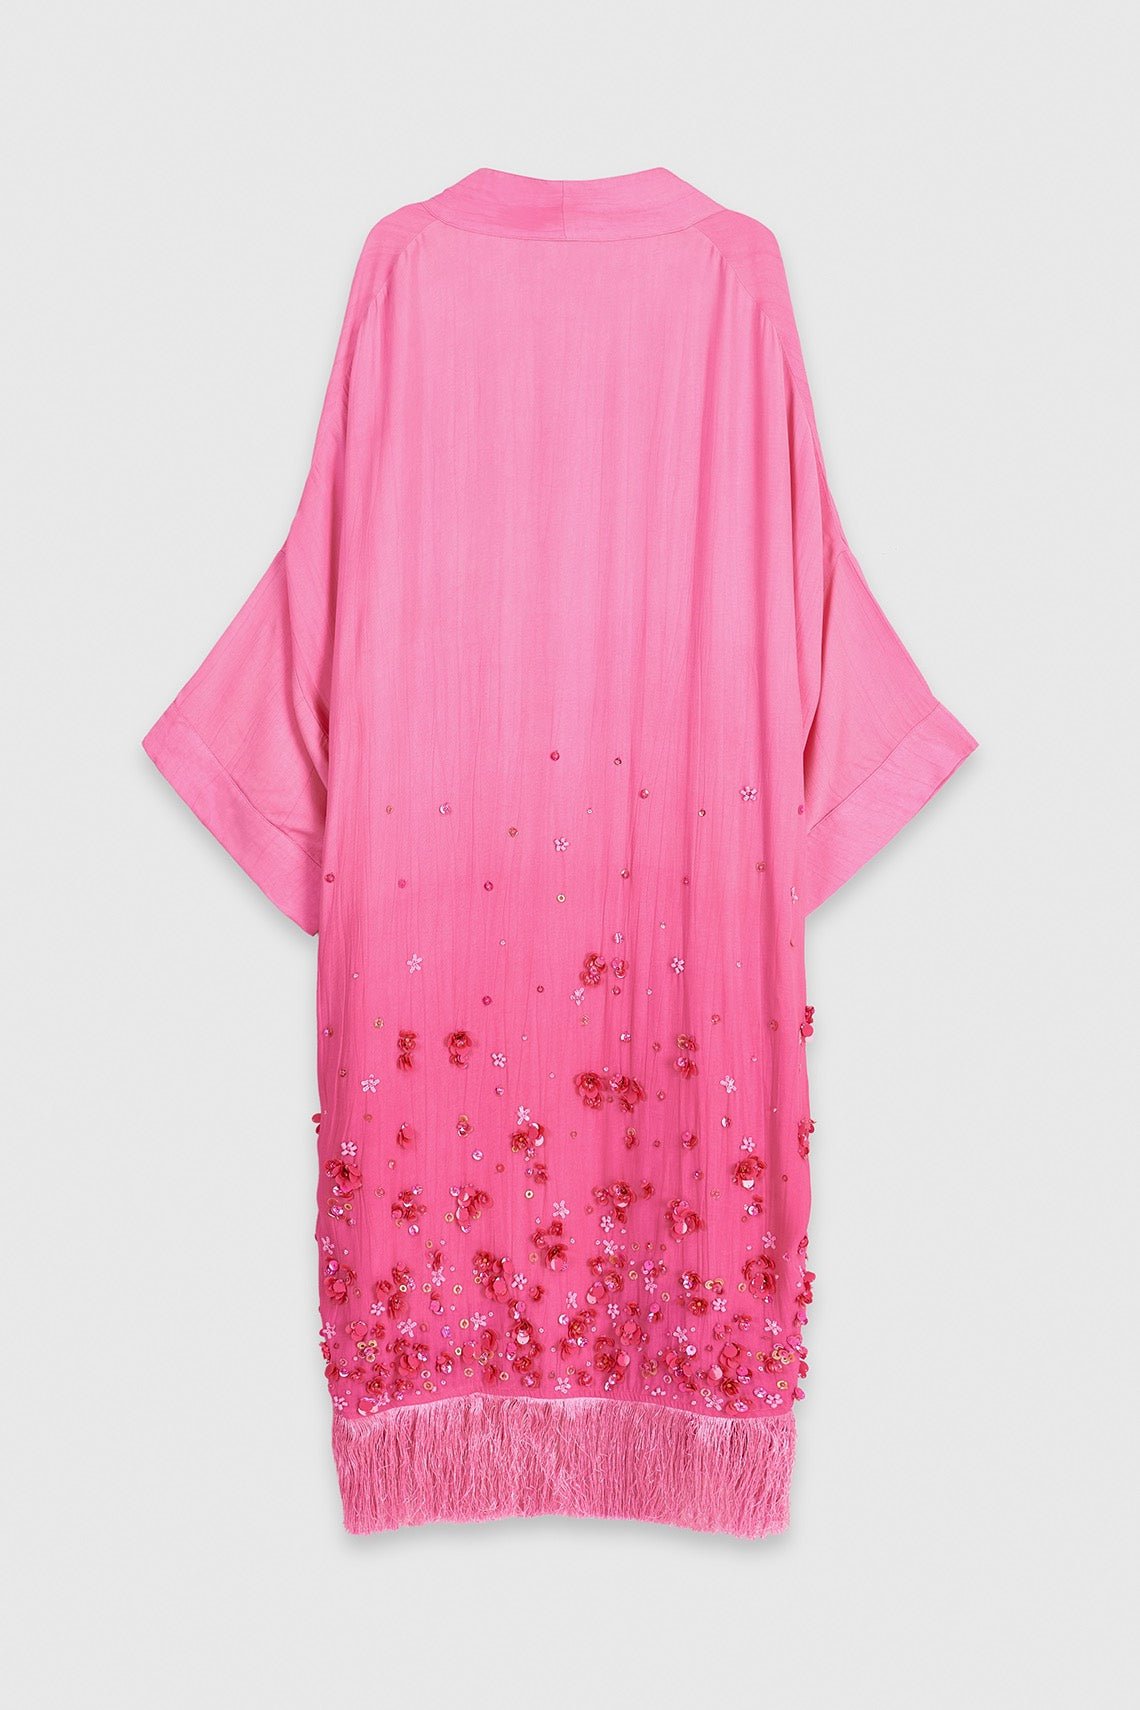 Essentiel Antwerp- Bocktail Ombre Sequin Kimono: Pink Cheeks